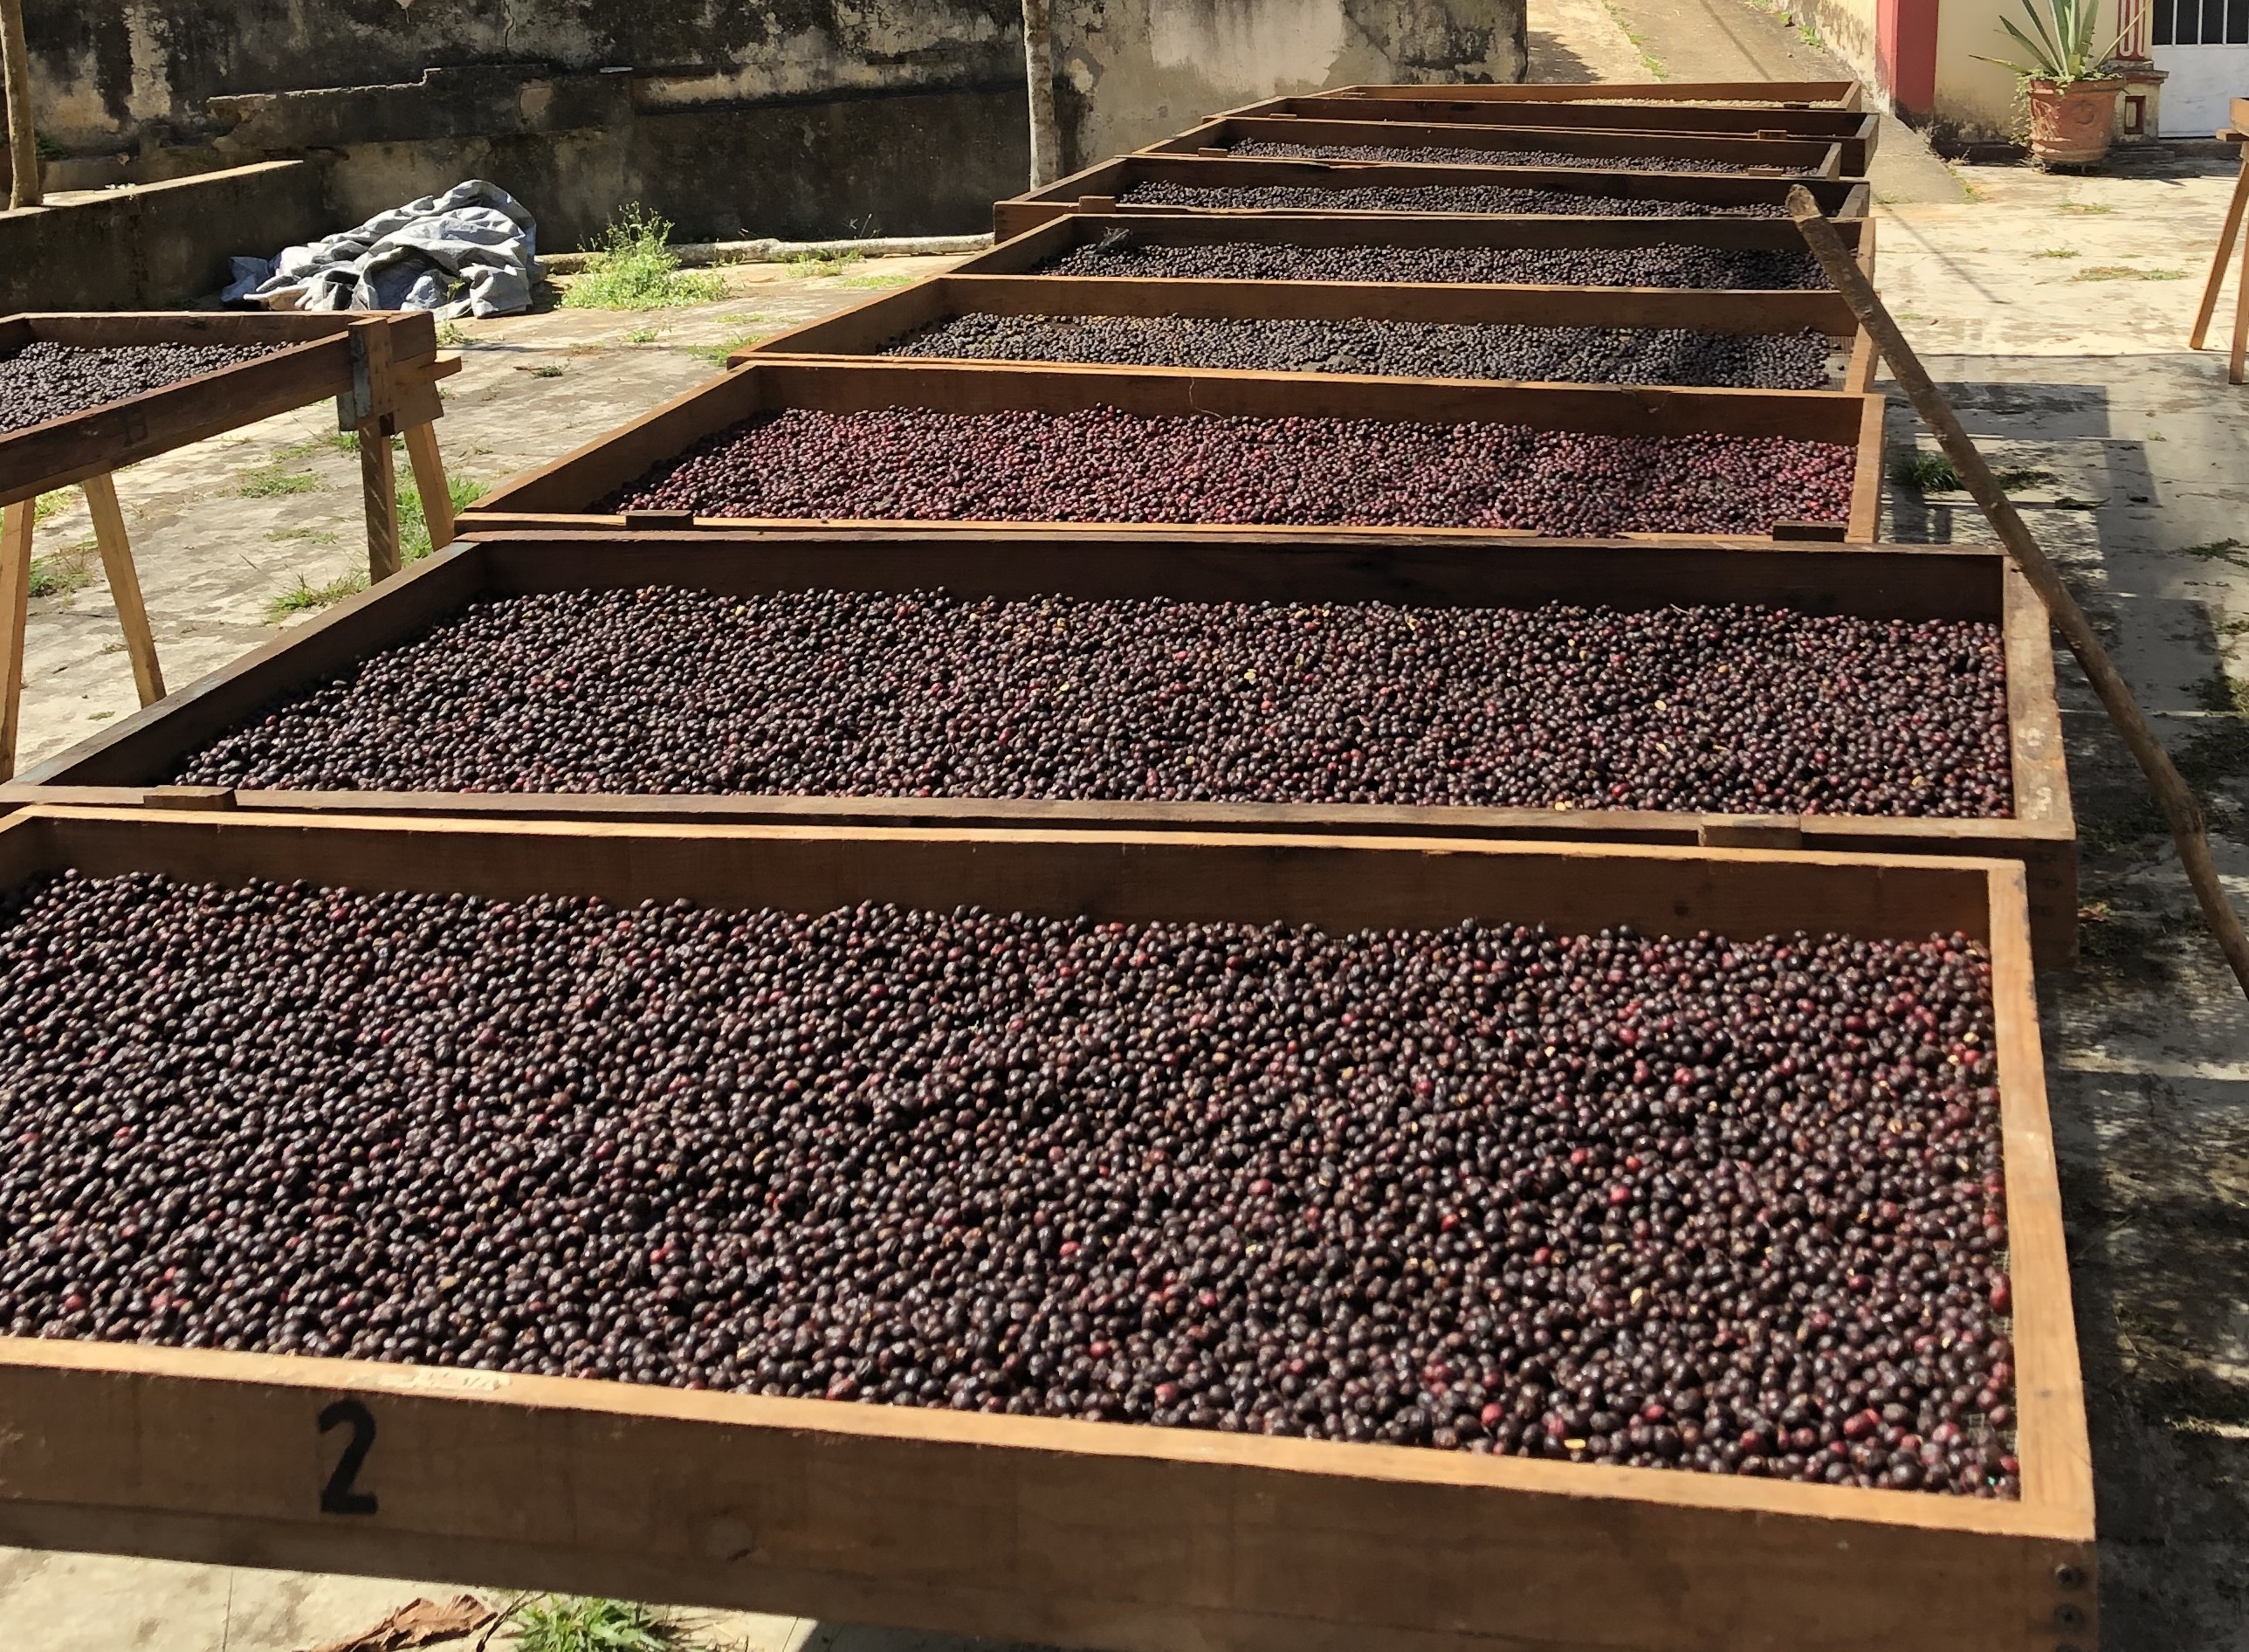 Empresarios de Guatemala afirman que China les prohibió exportar café y macadamia